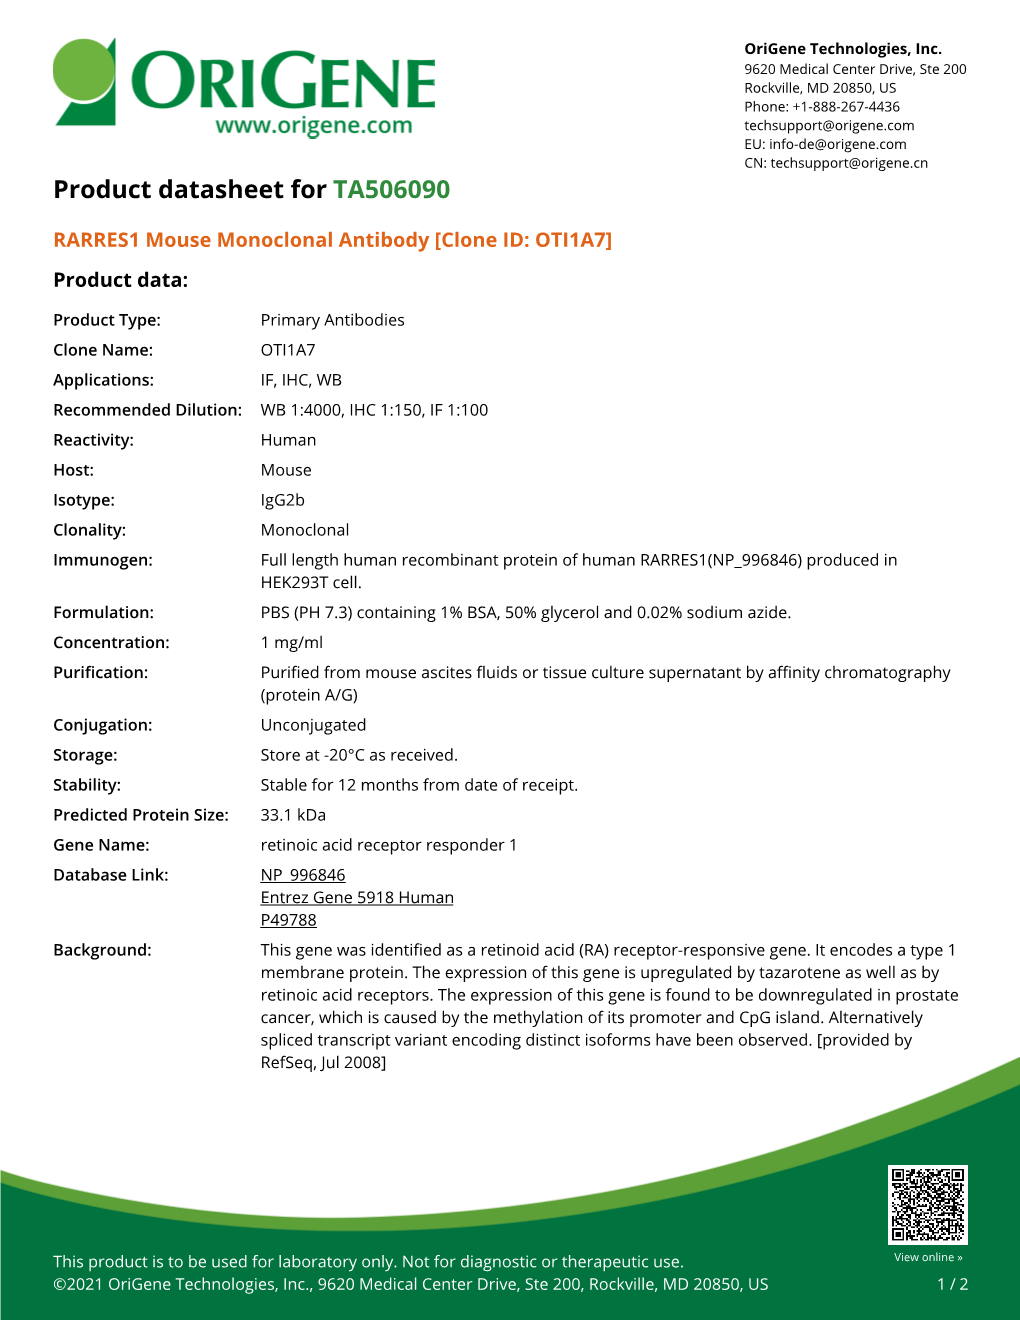 RARRES1 Mouse Monoclonal Antibody [Clone ID: OTI1A7] Product Data